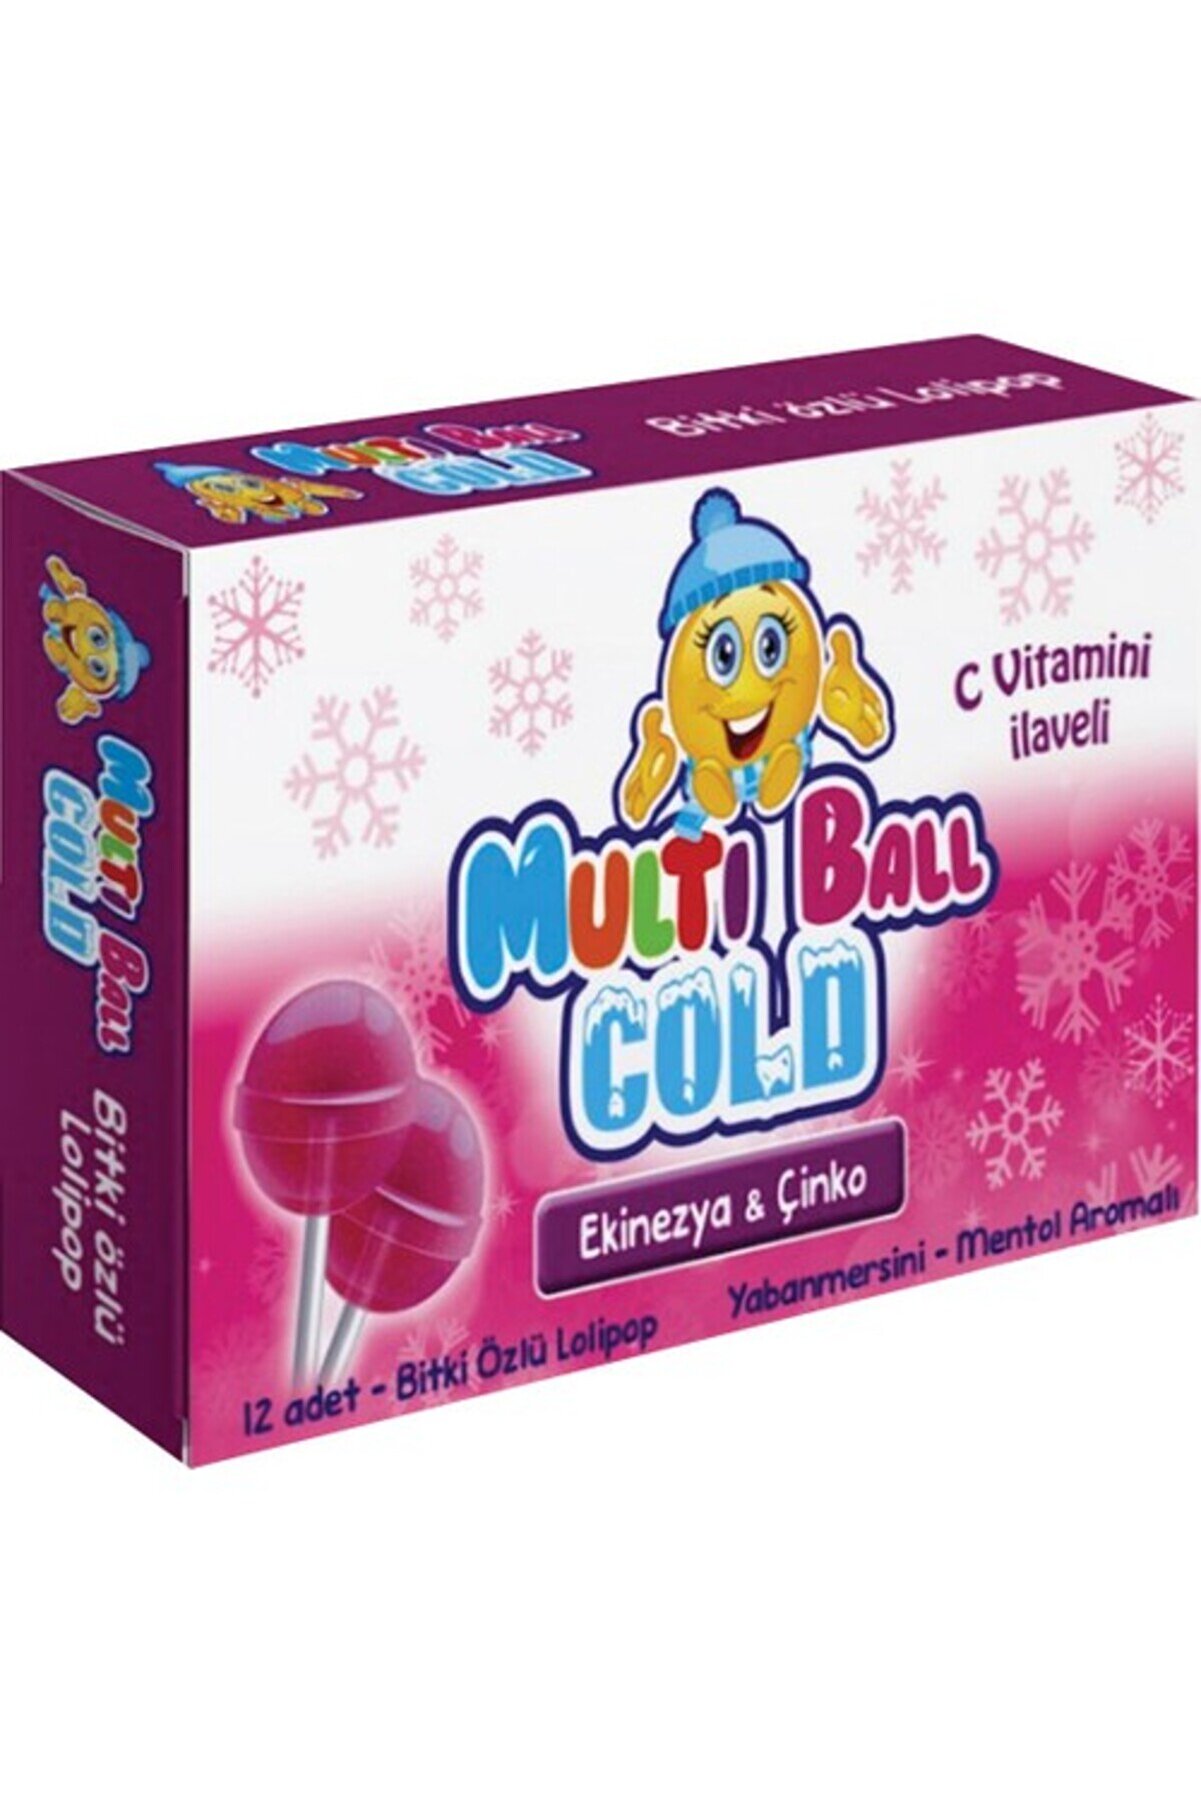 MULTİ BALL COLD Multiball Cold Ekinezya Çinko Lolipop 12 Adet